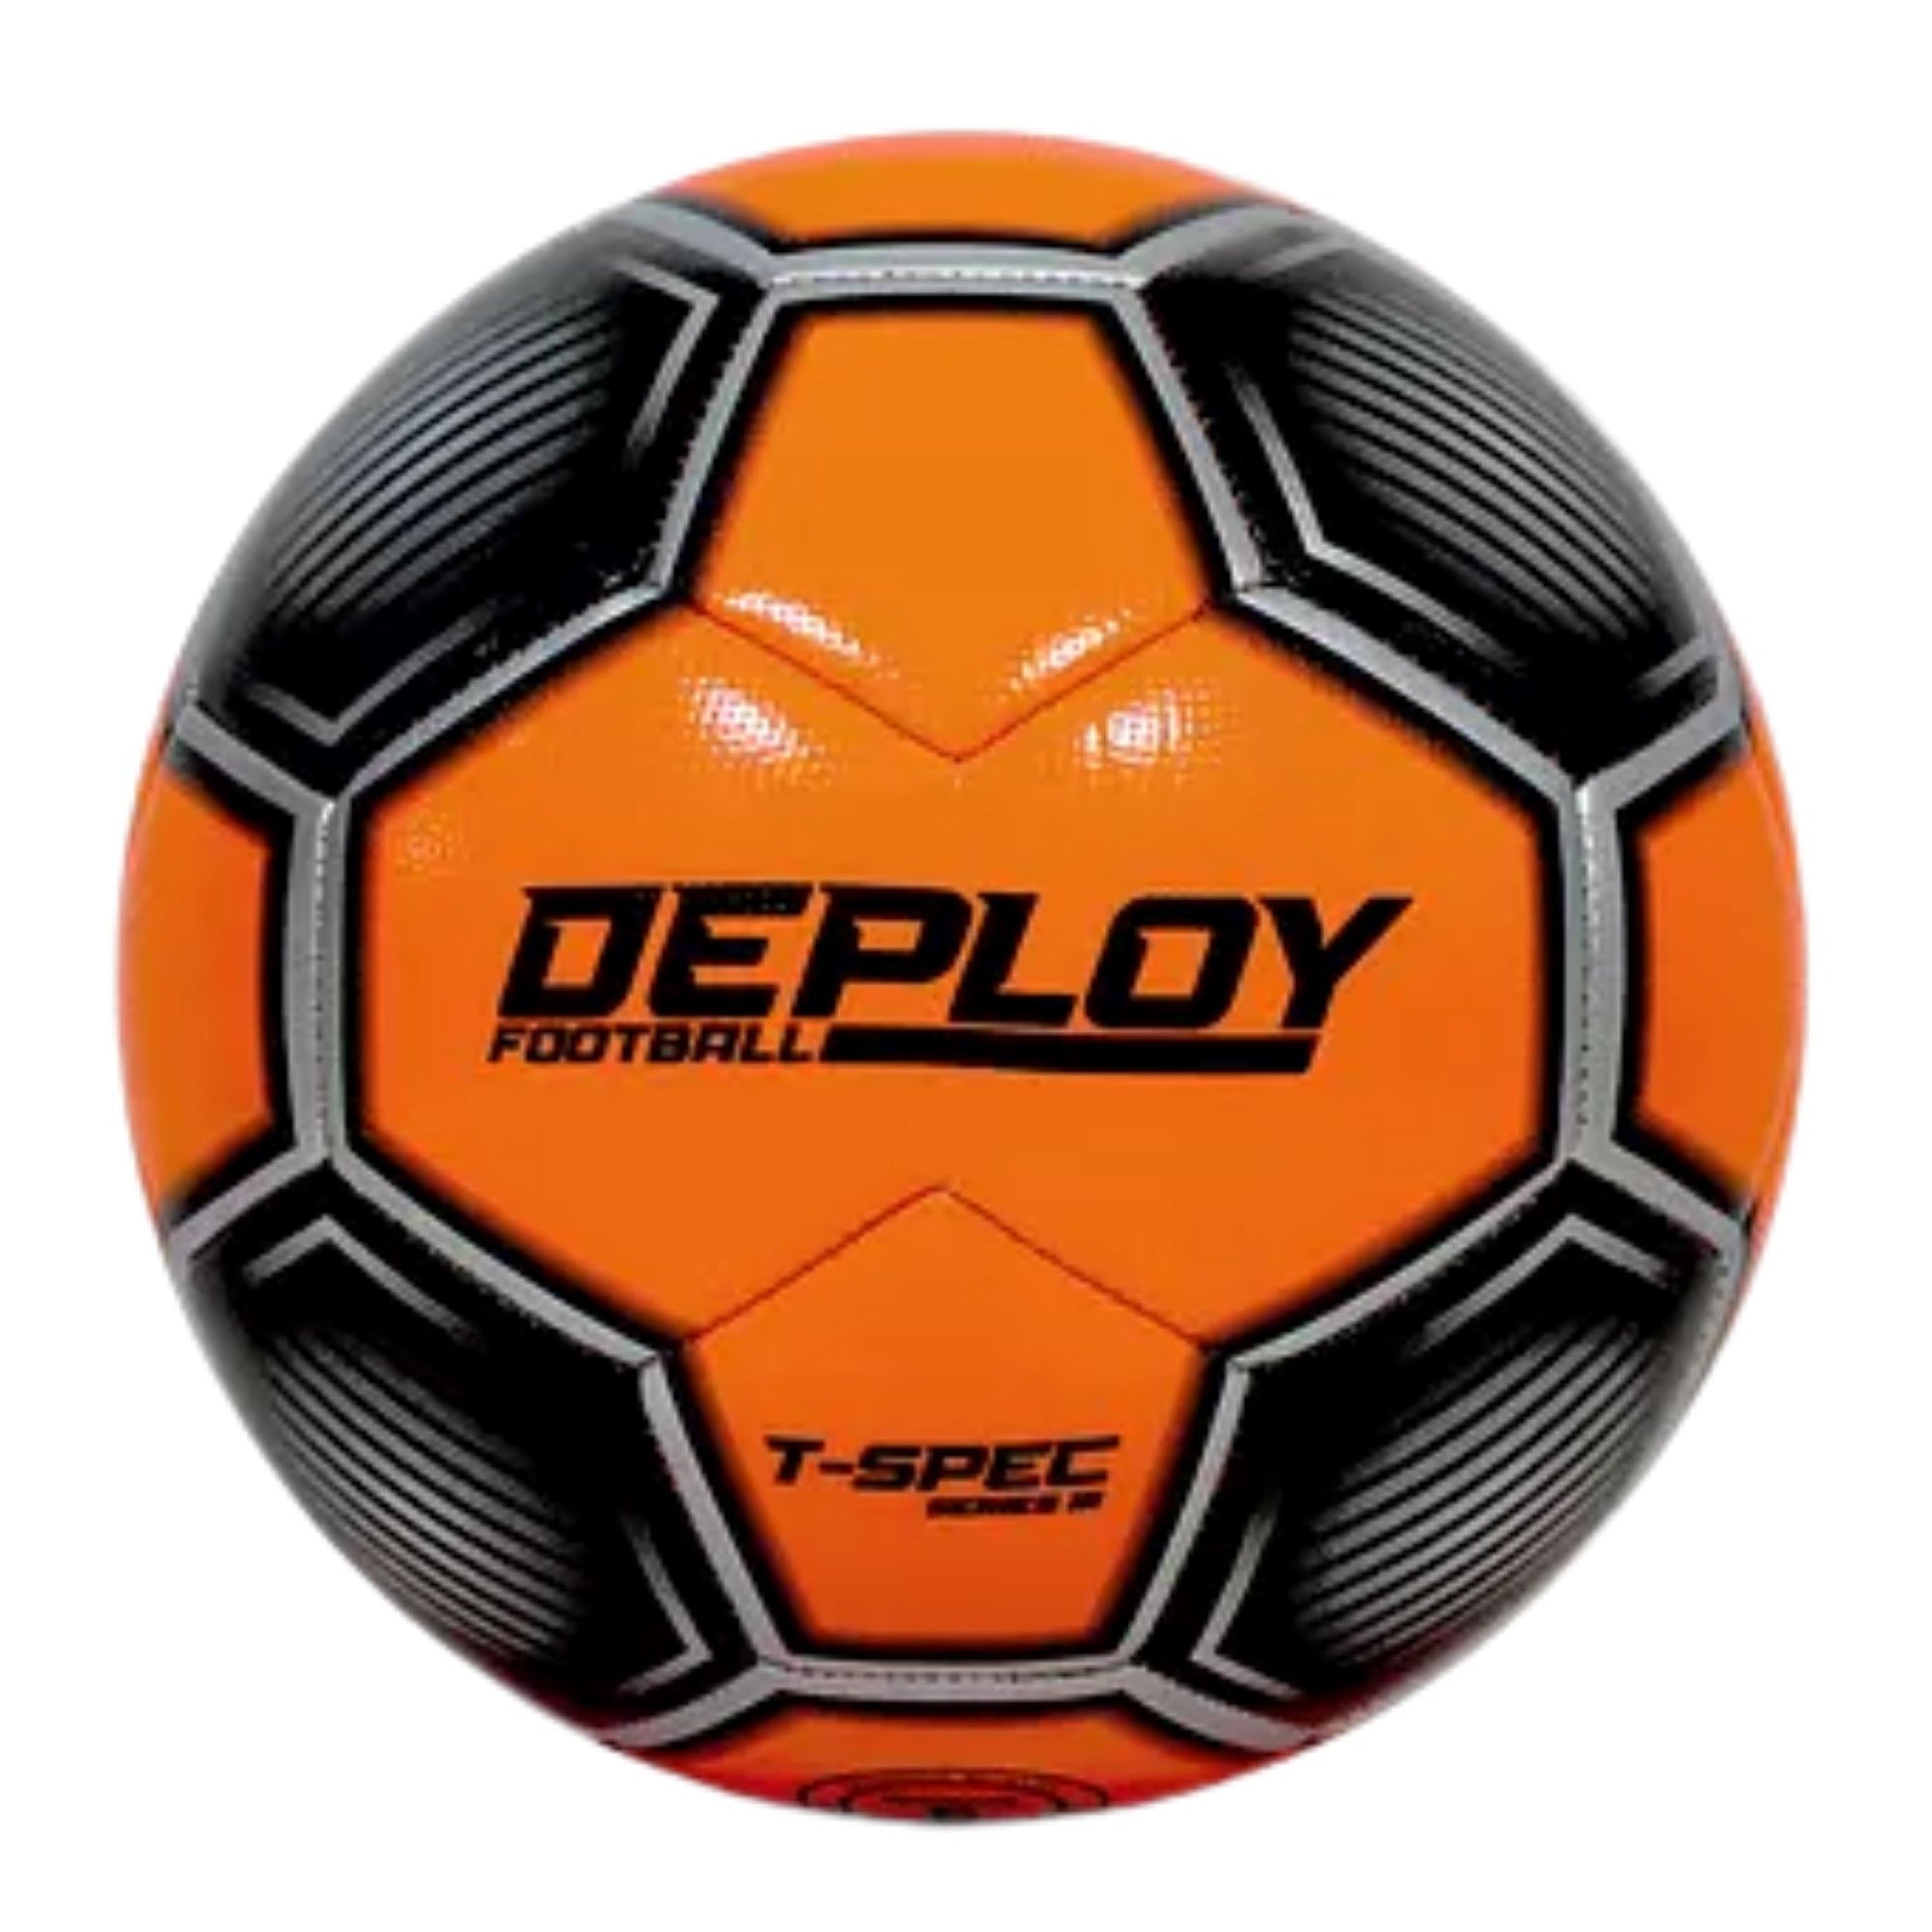 T-SPEC SERIES III - Orange - JUNIOR TRAINING FOOTBALL Soccer Balls ITA SPORT 